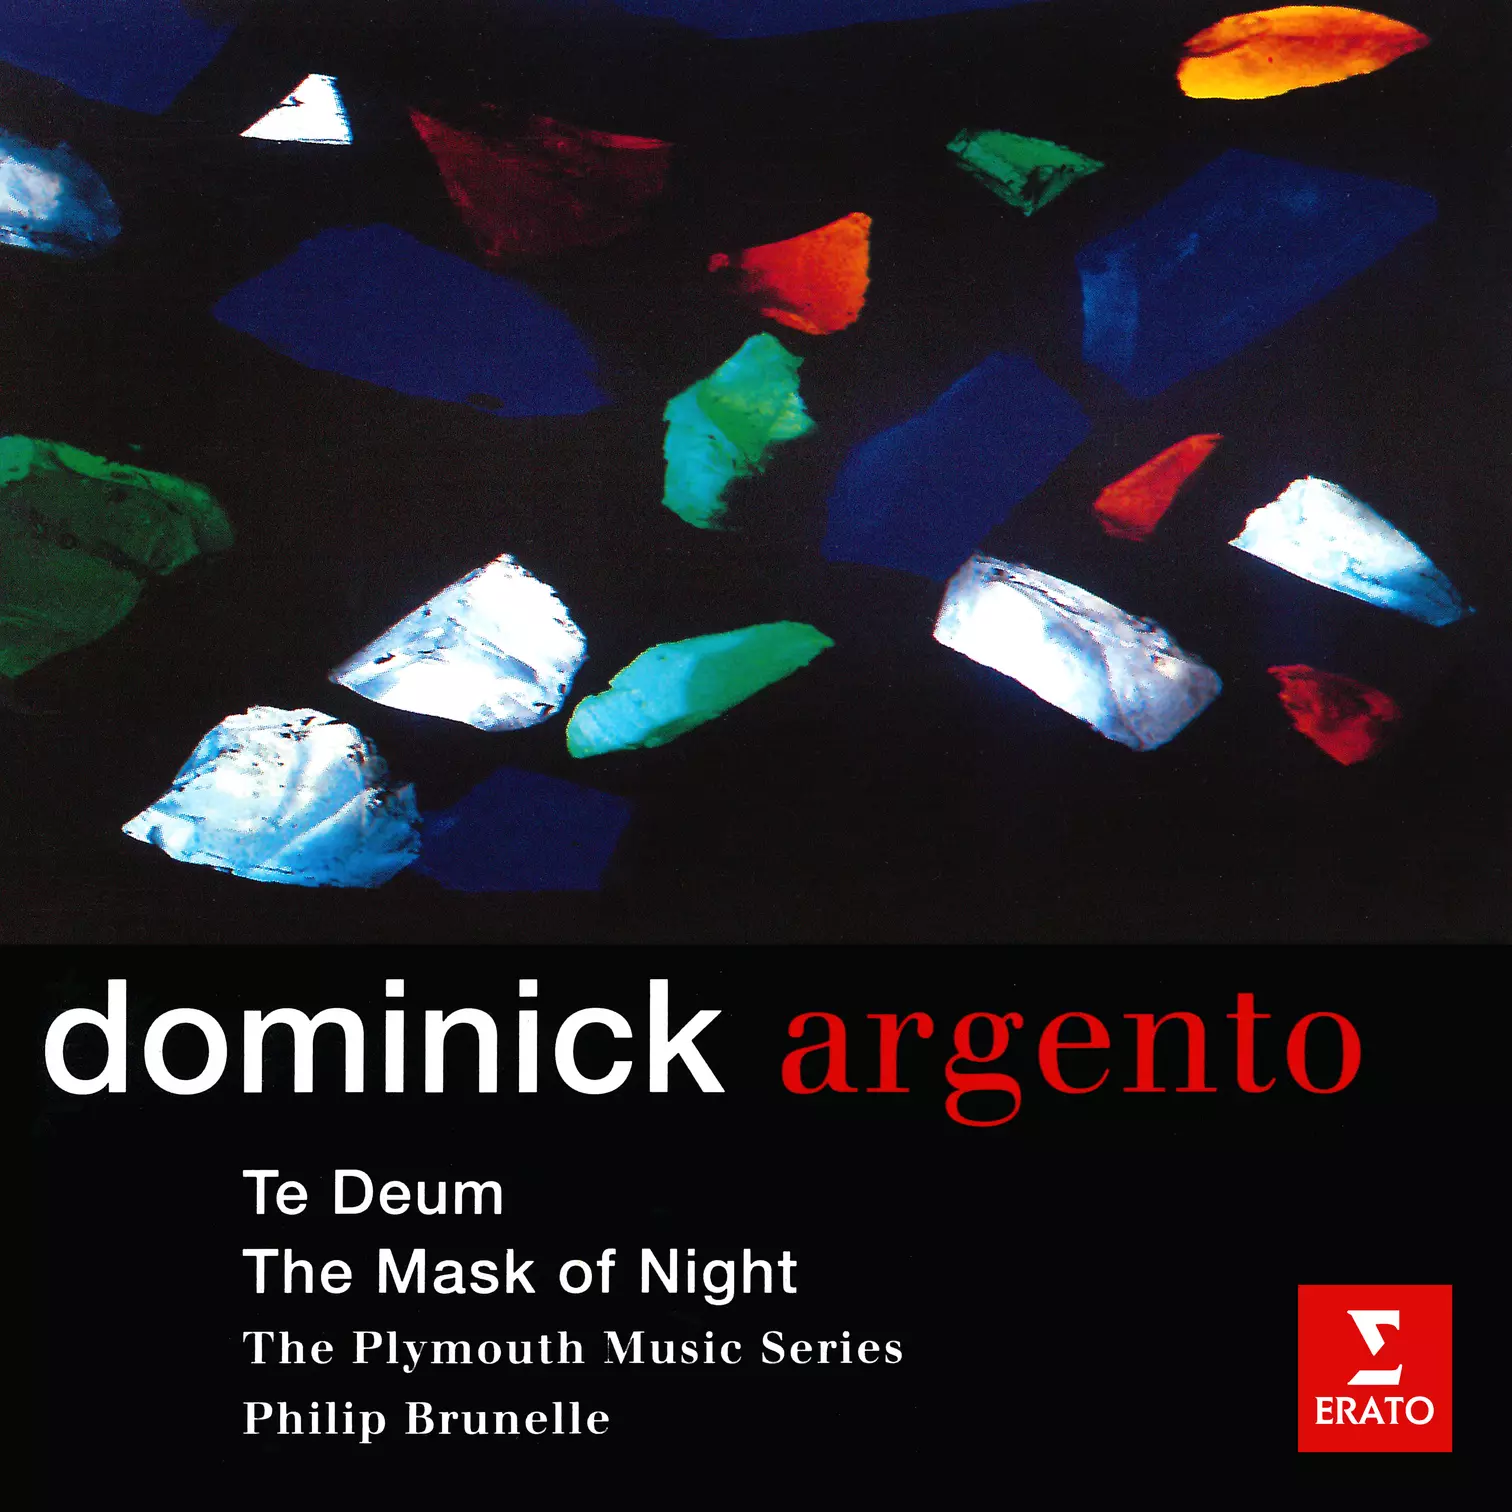 Argento: Te Deum & The Mask of Night